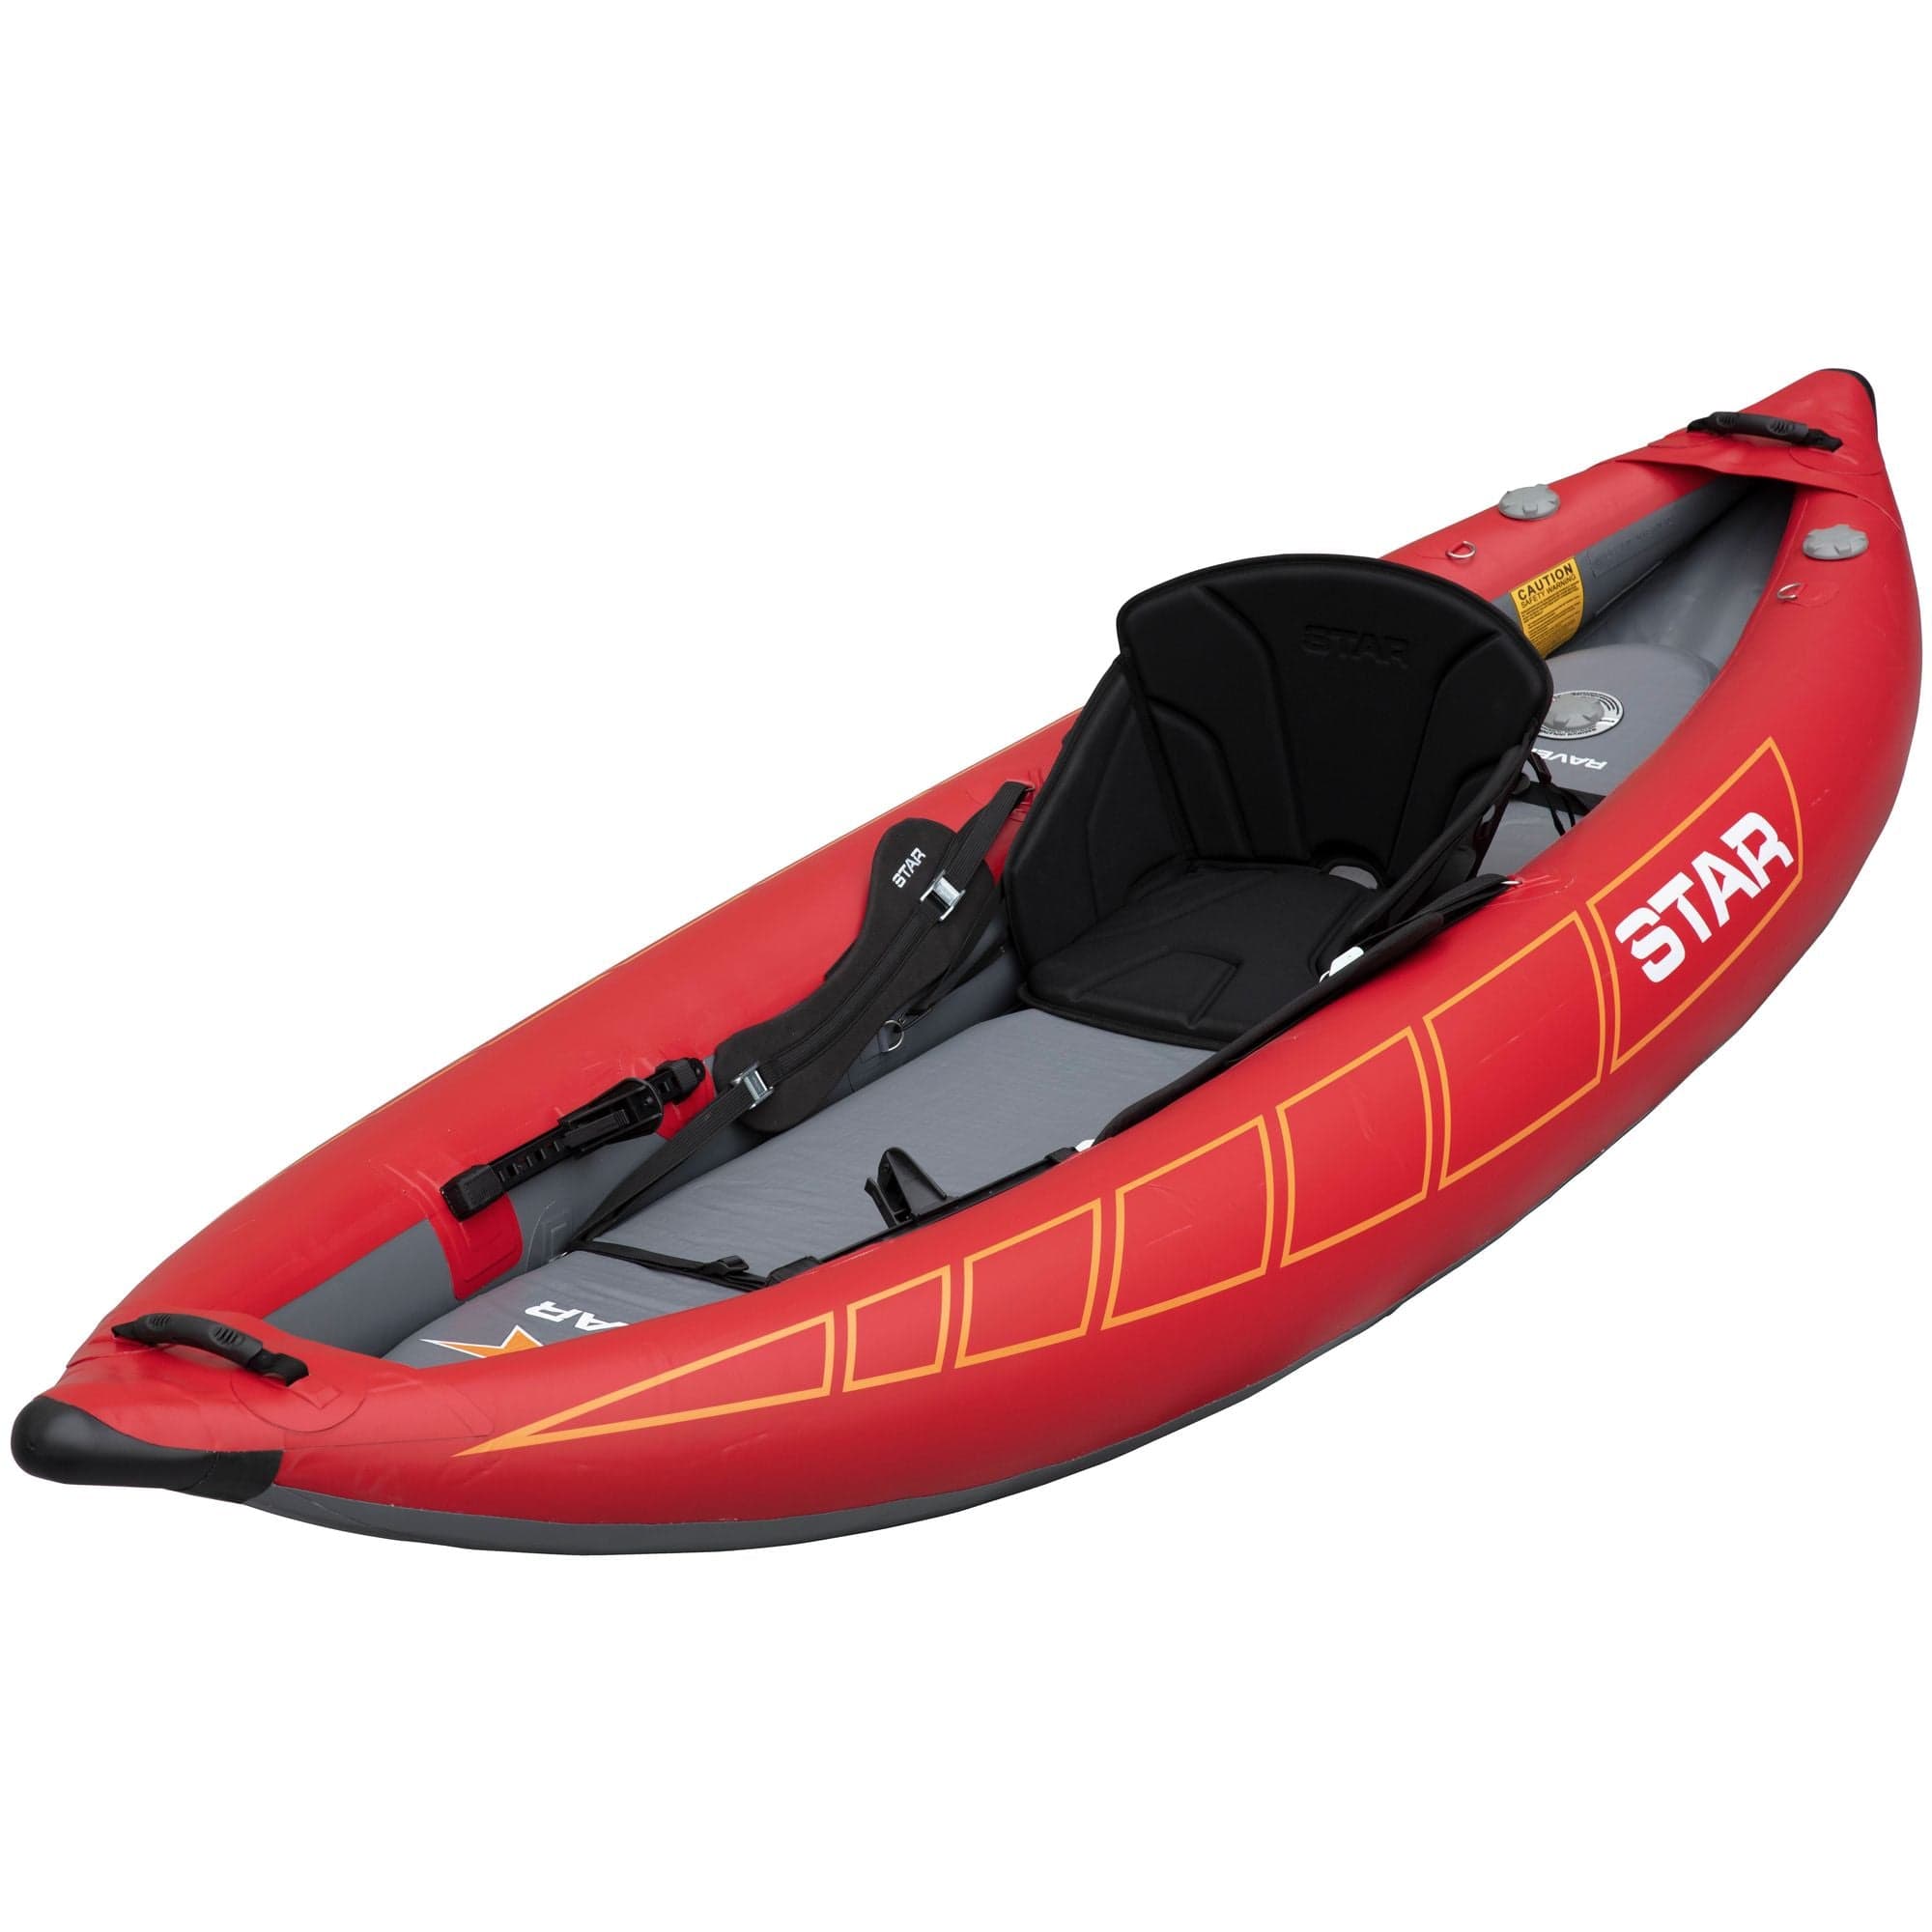 NRS STAR Raven I Pro Inflatable Kayak